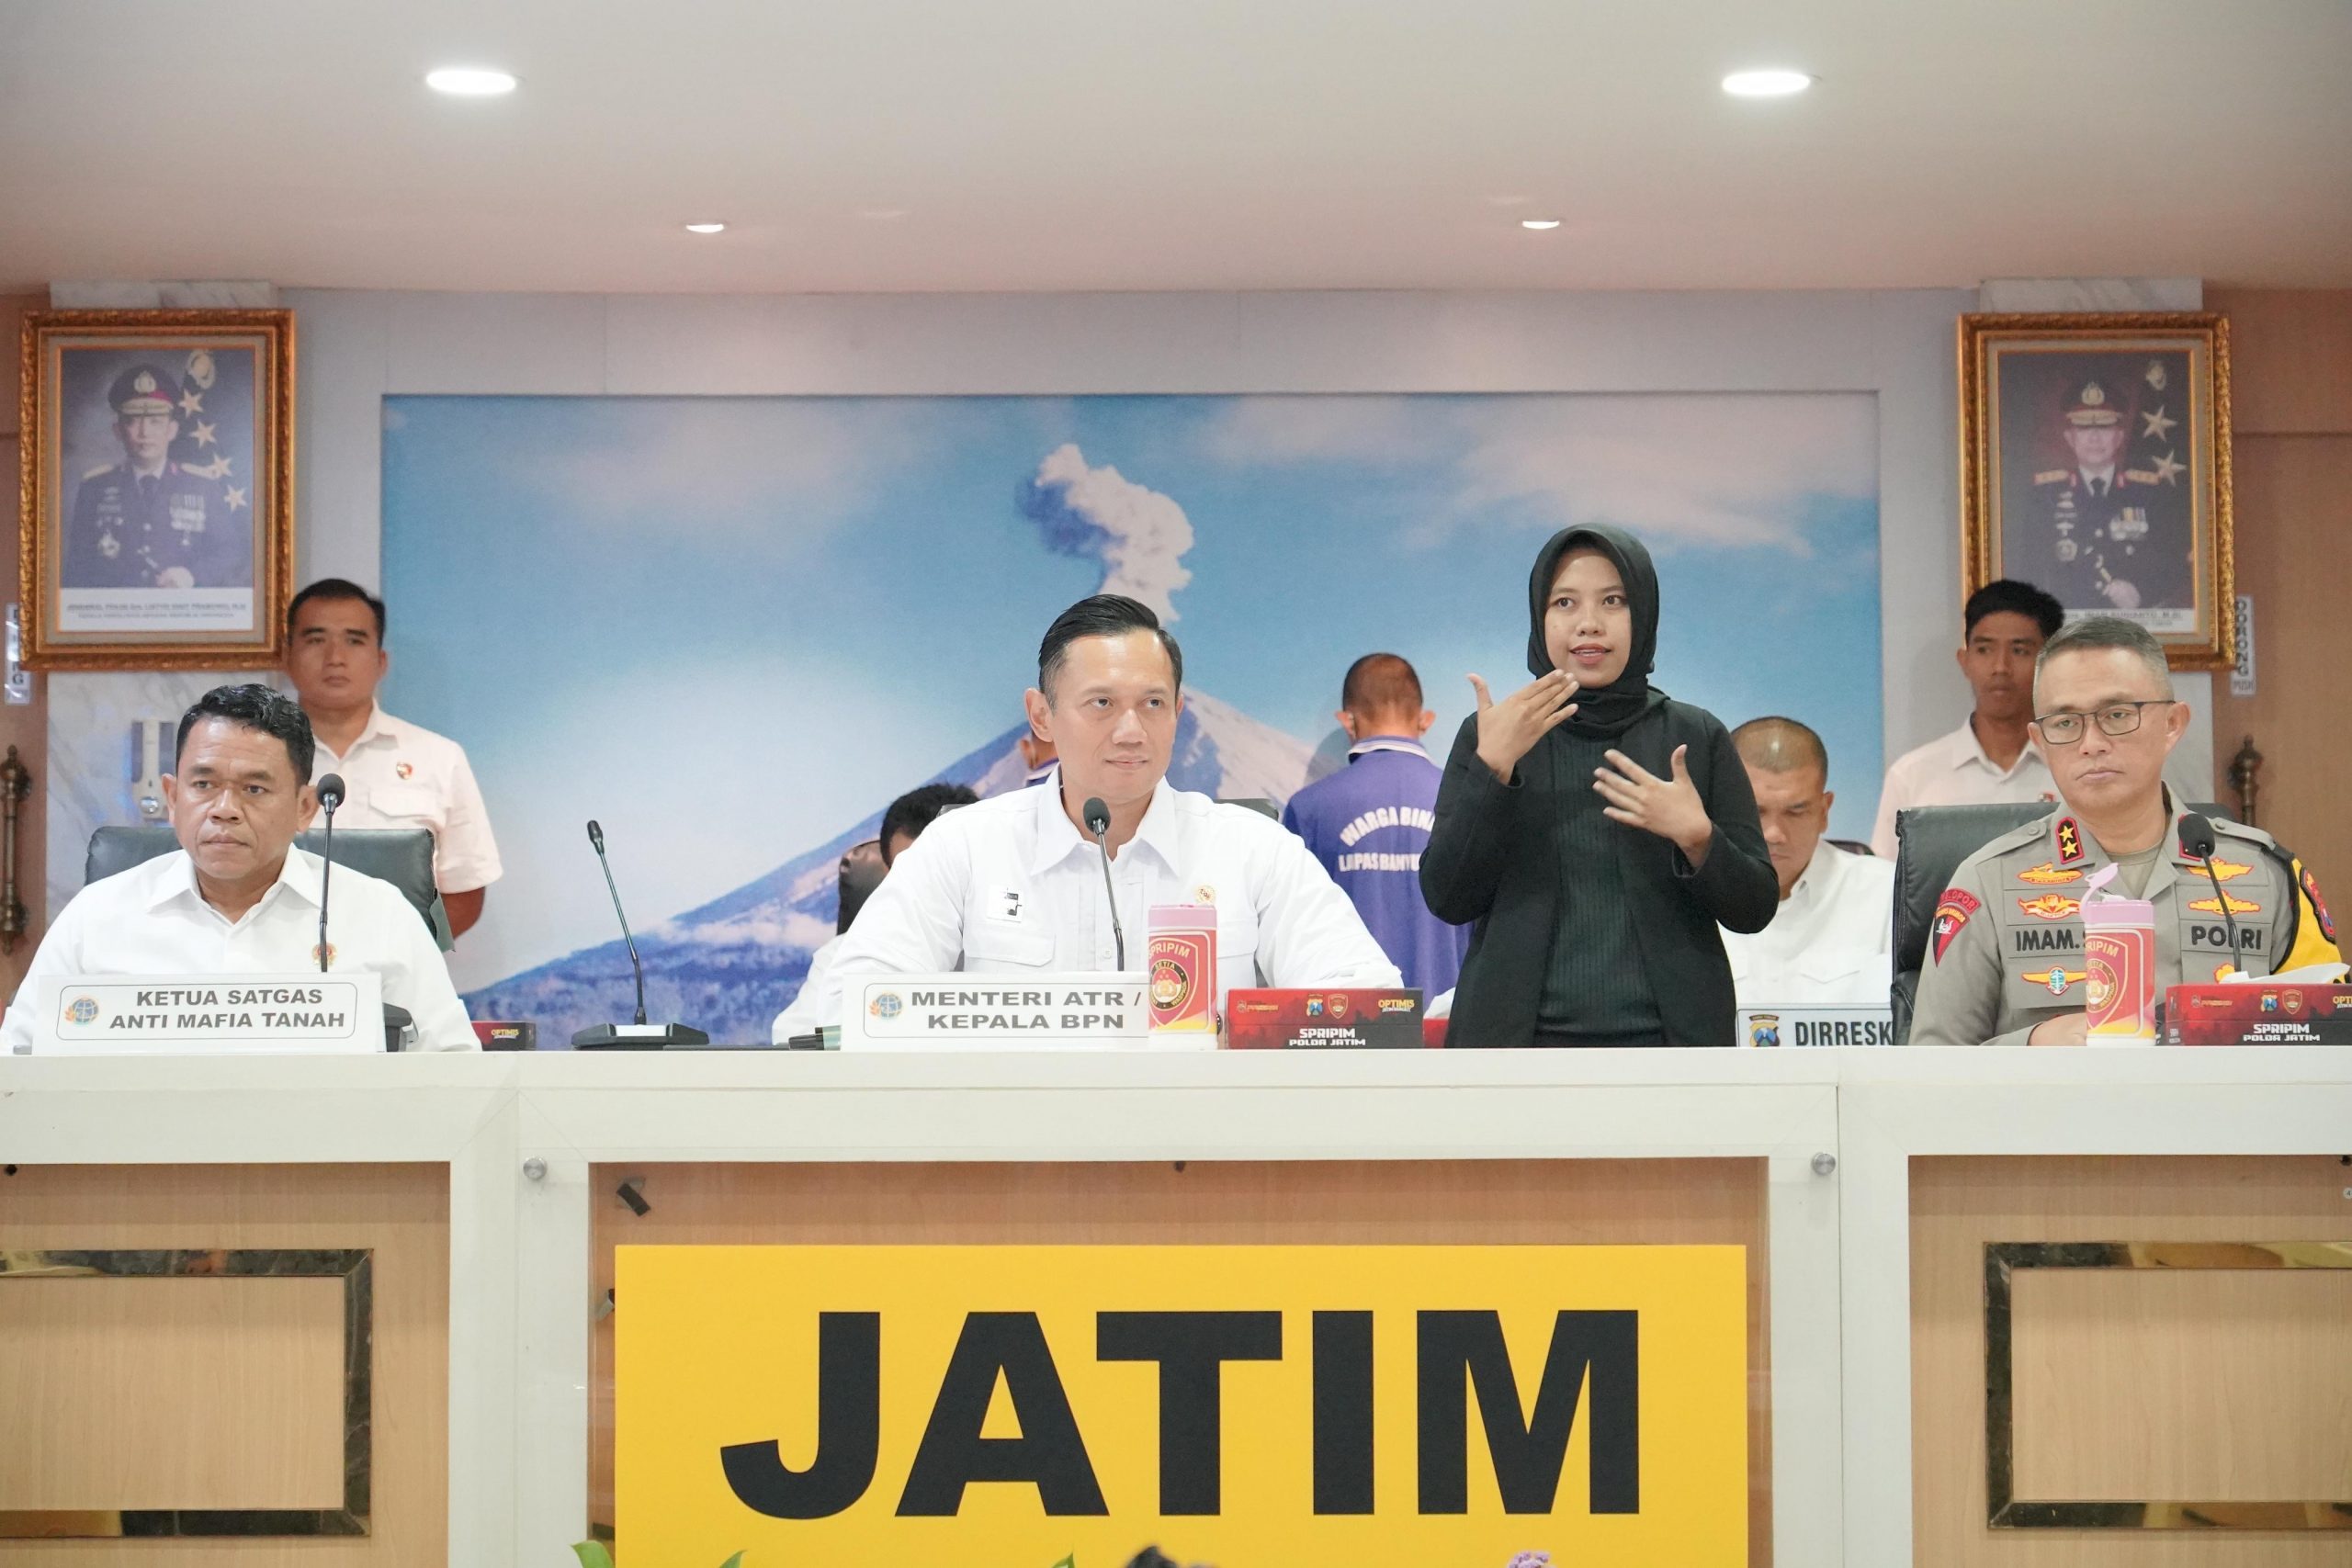 Ungkap Target Operasi Tindak Pidana Pertanahan di Jatim, Menteri ATR/Kepala BPN: Mafia Tanah Merugikan Rakyat dan Negara